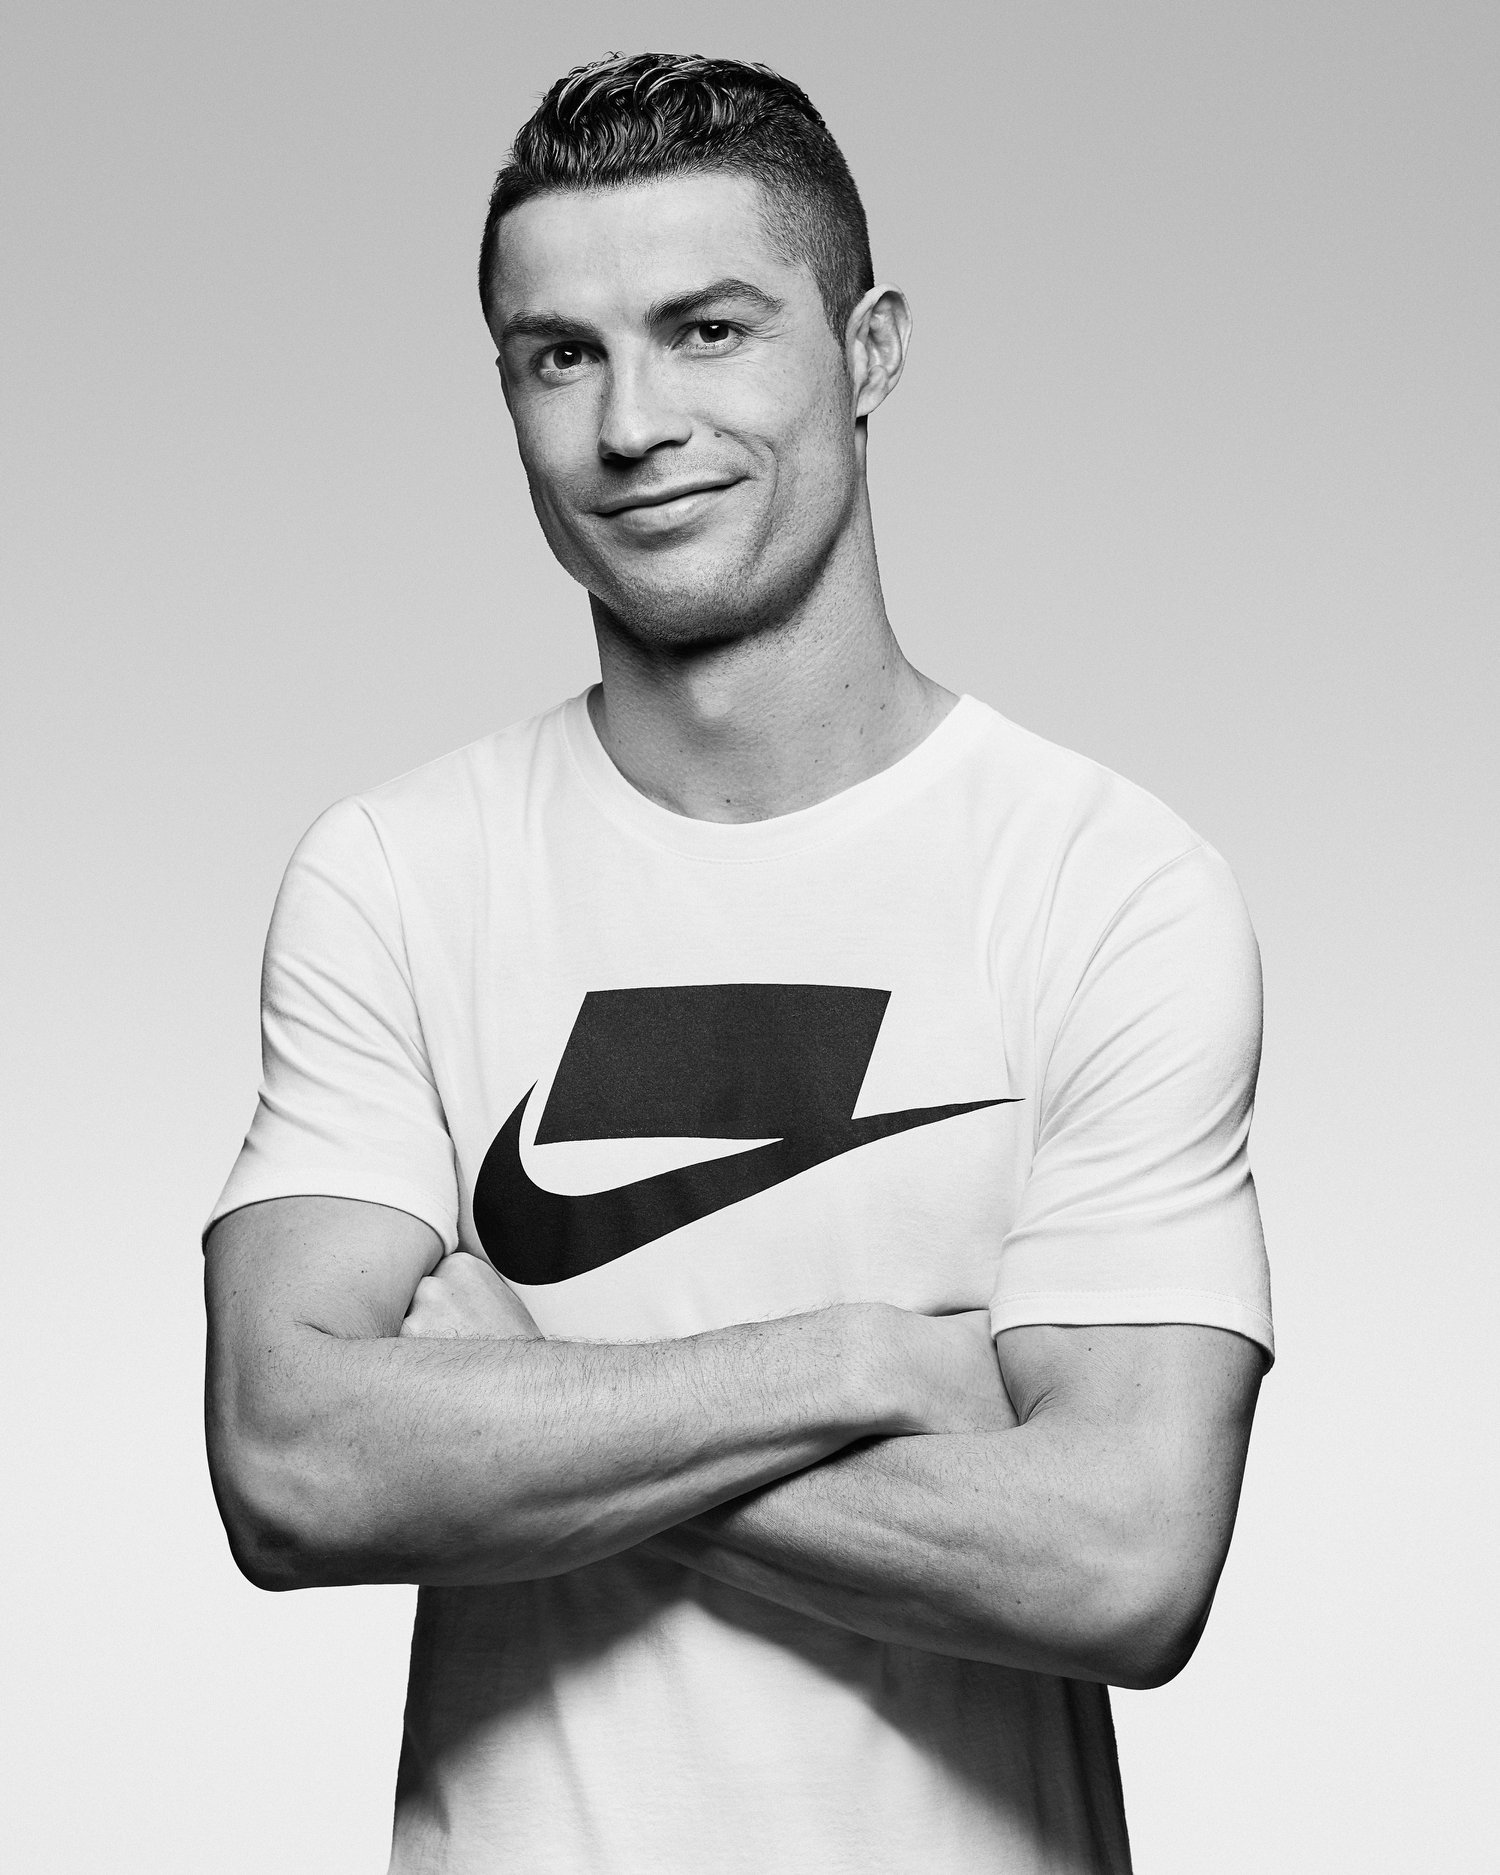 Ronaldo Instagram